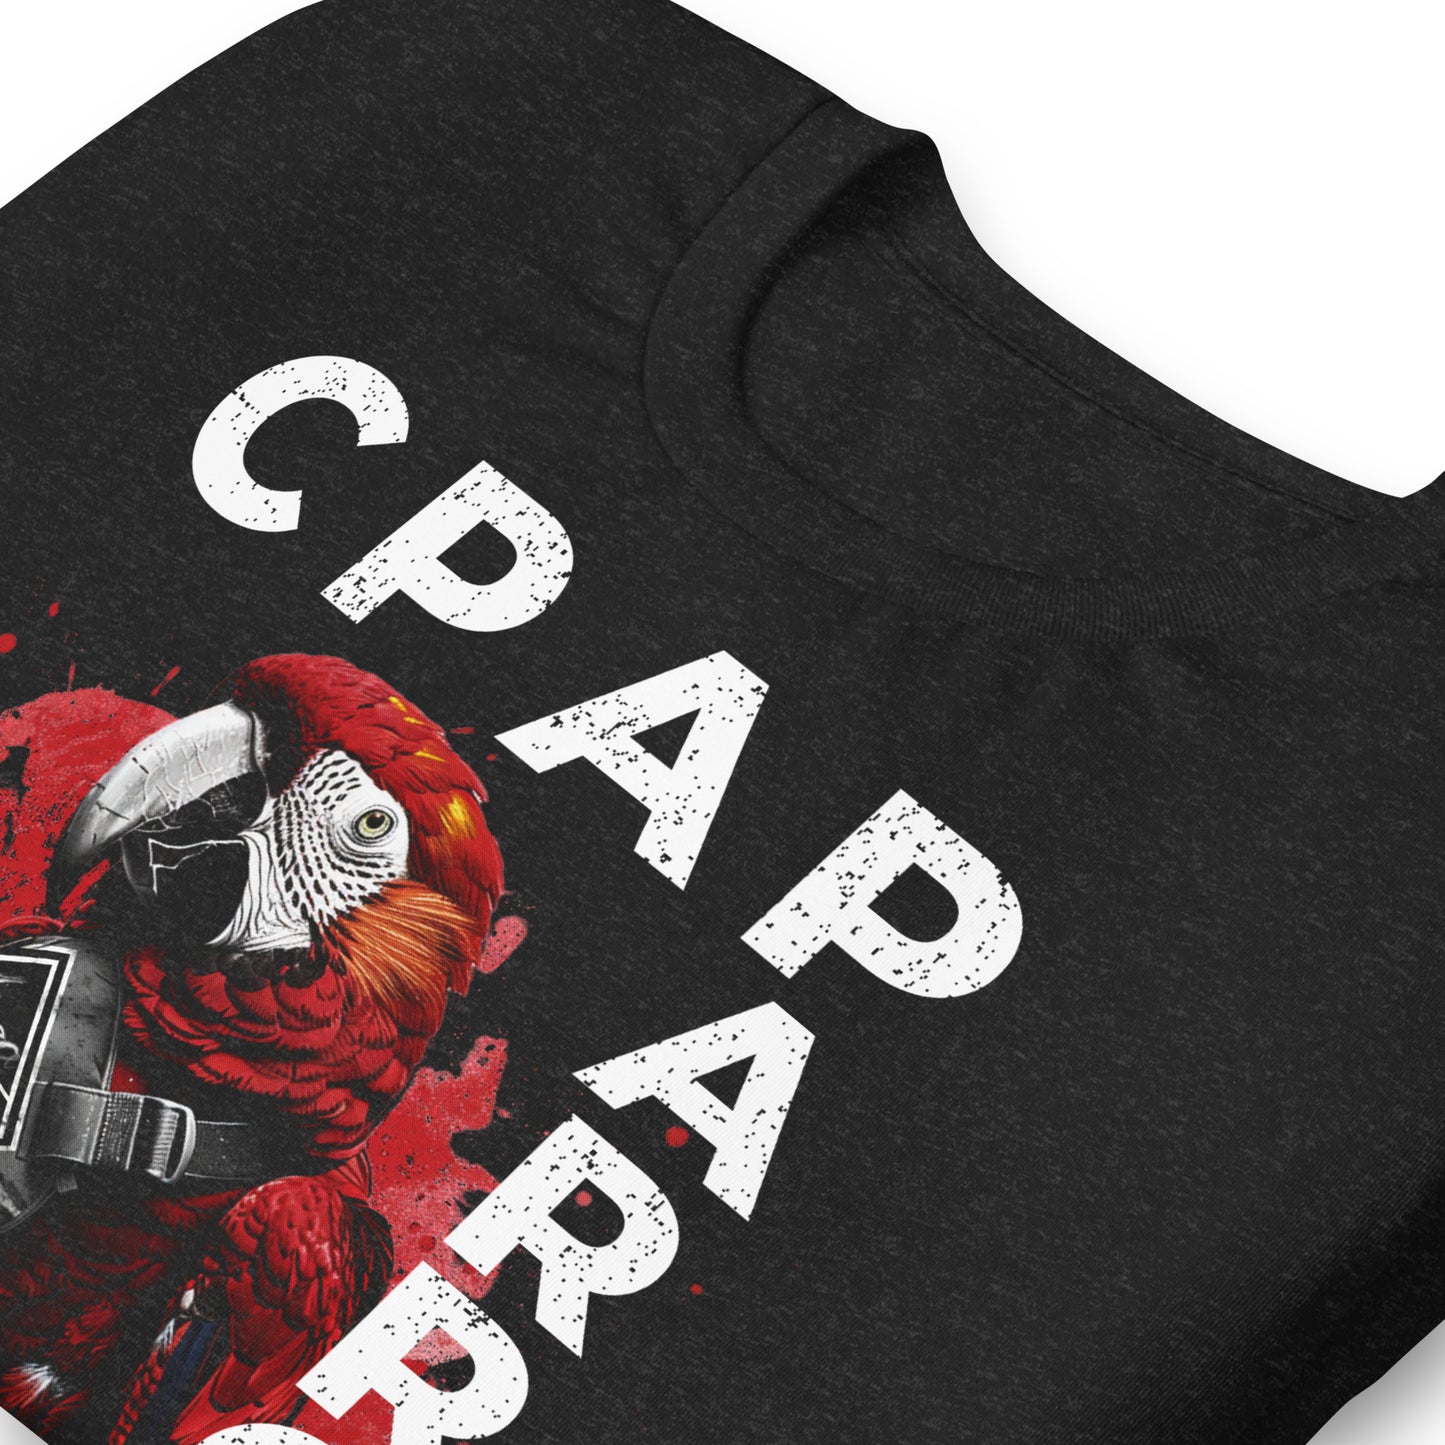 CPAParrot, Parrot Wearing a CPAP, CPAP, Animals, Sleep Apnea, Graphic Tee Shirt, Black